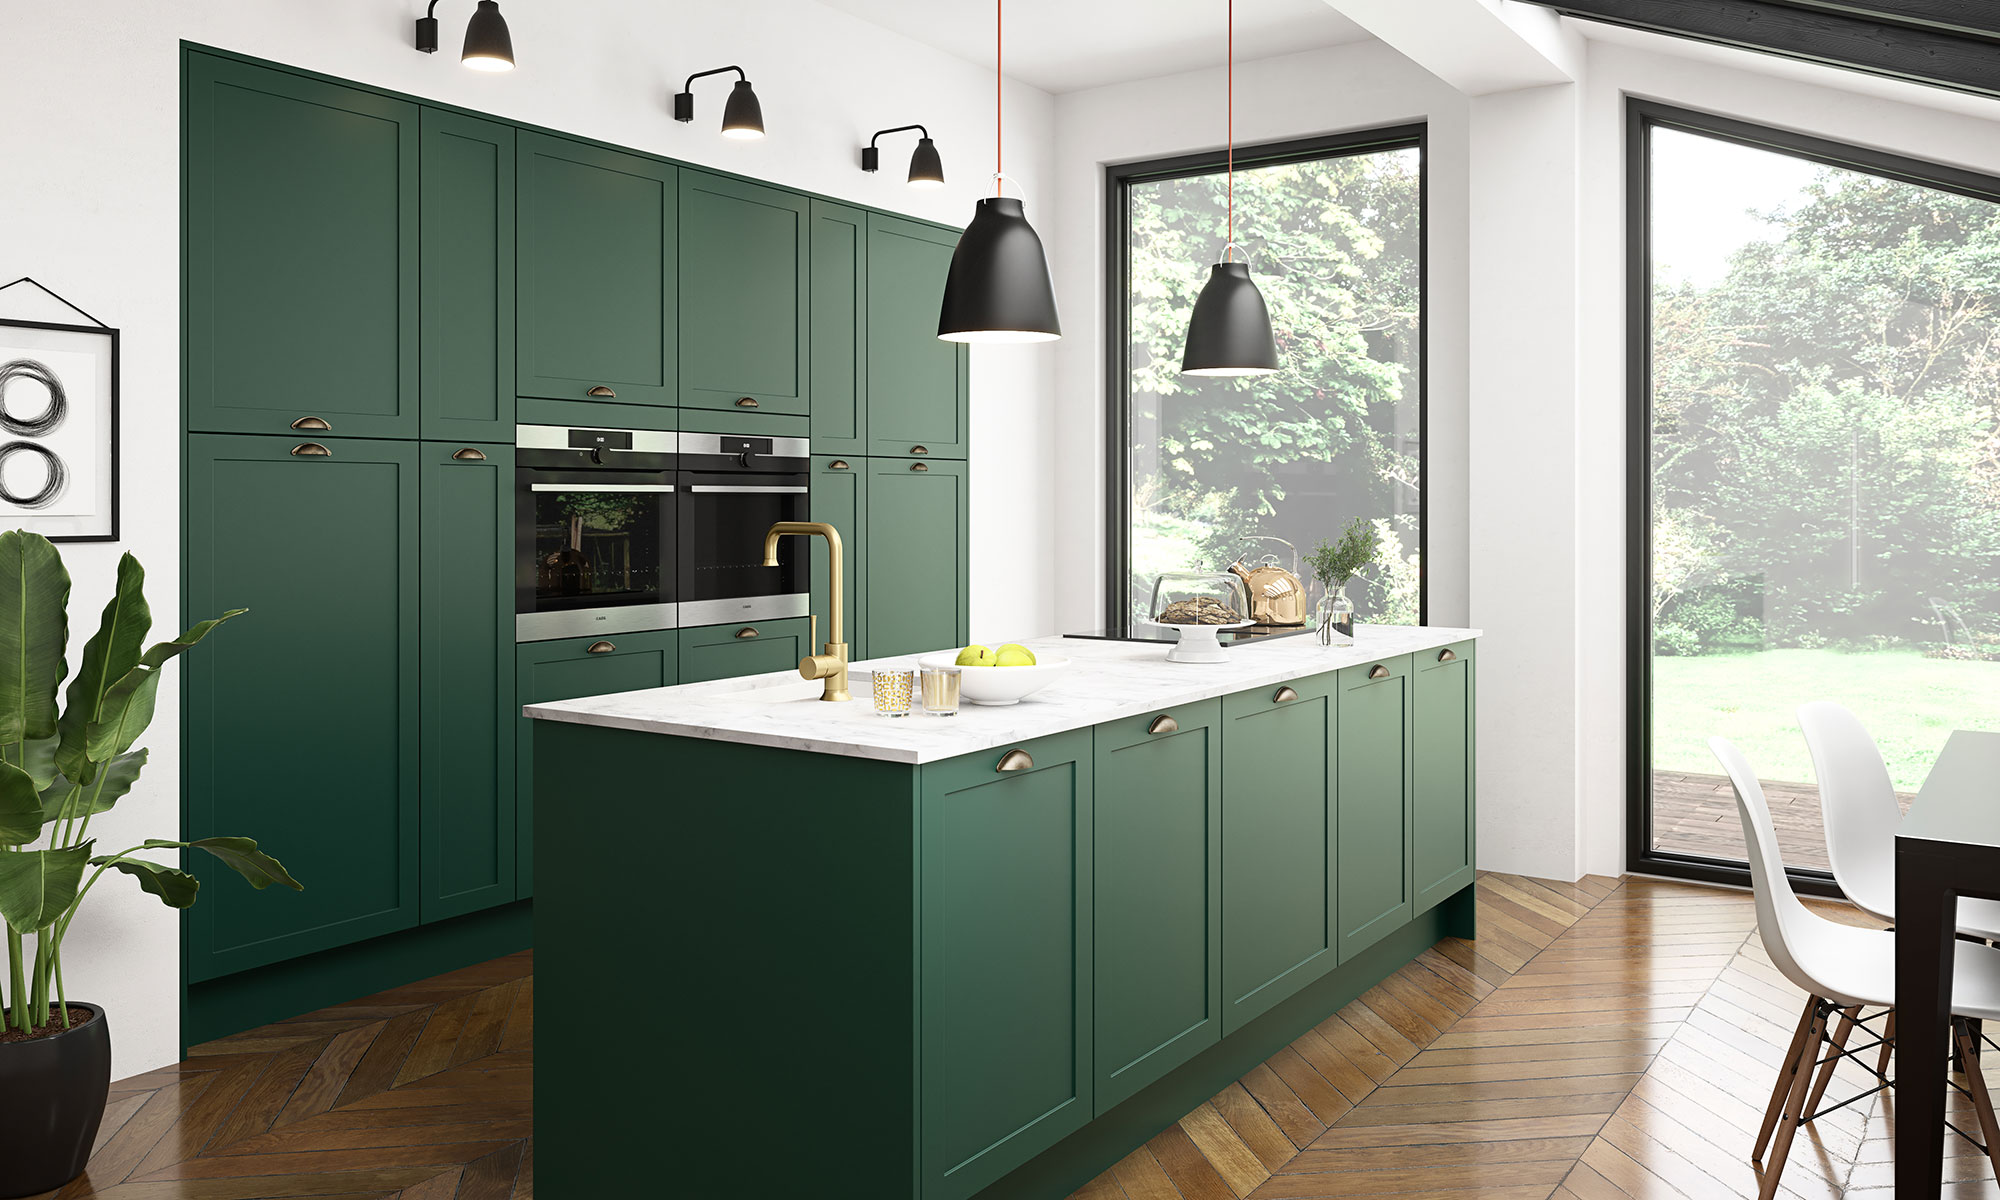 Green kitchen design - starring bottle green